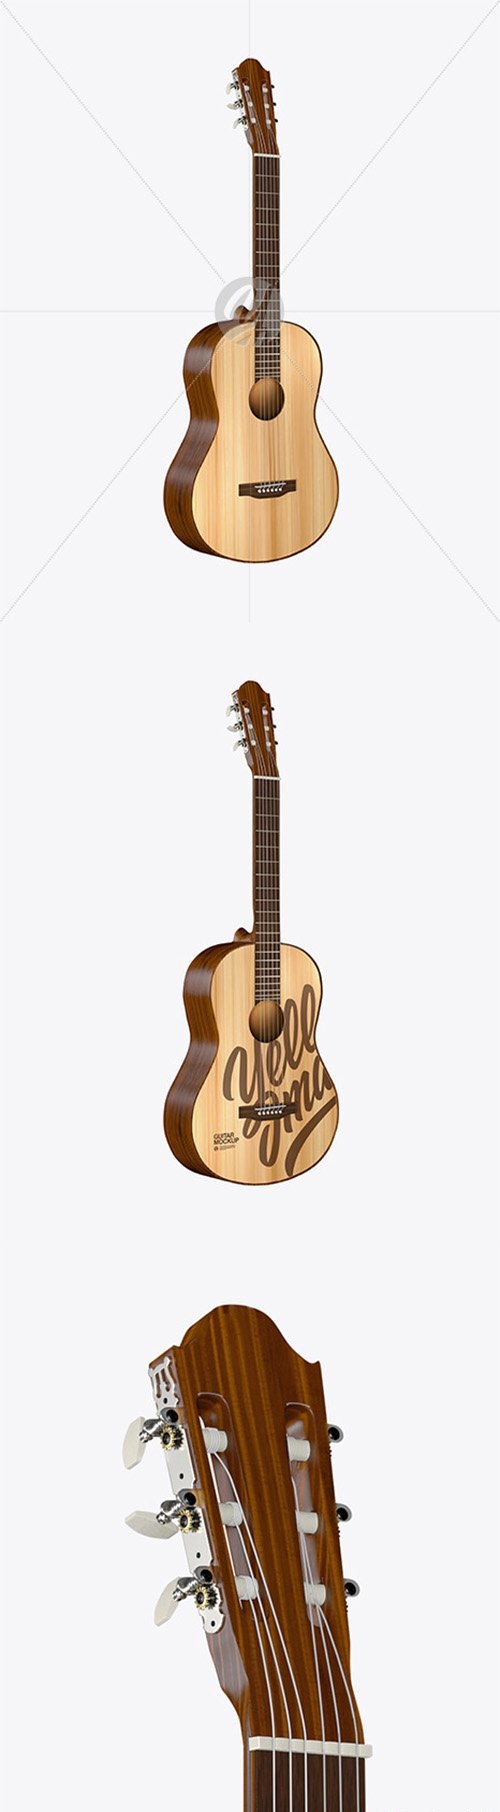 Wooden Classic Guitar Mockup 67422